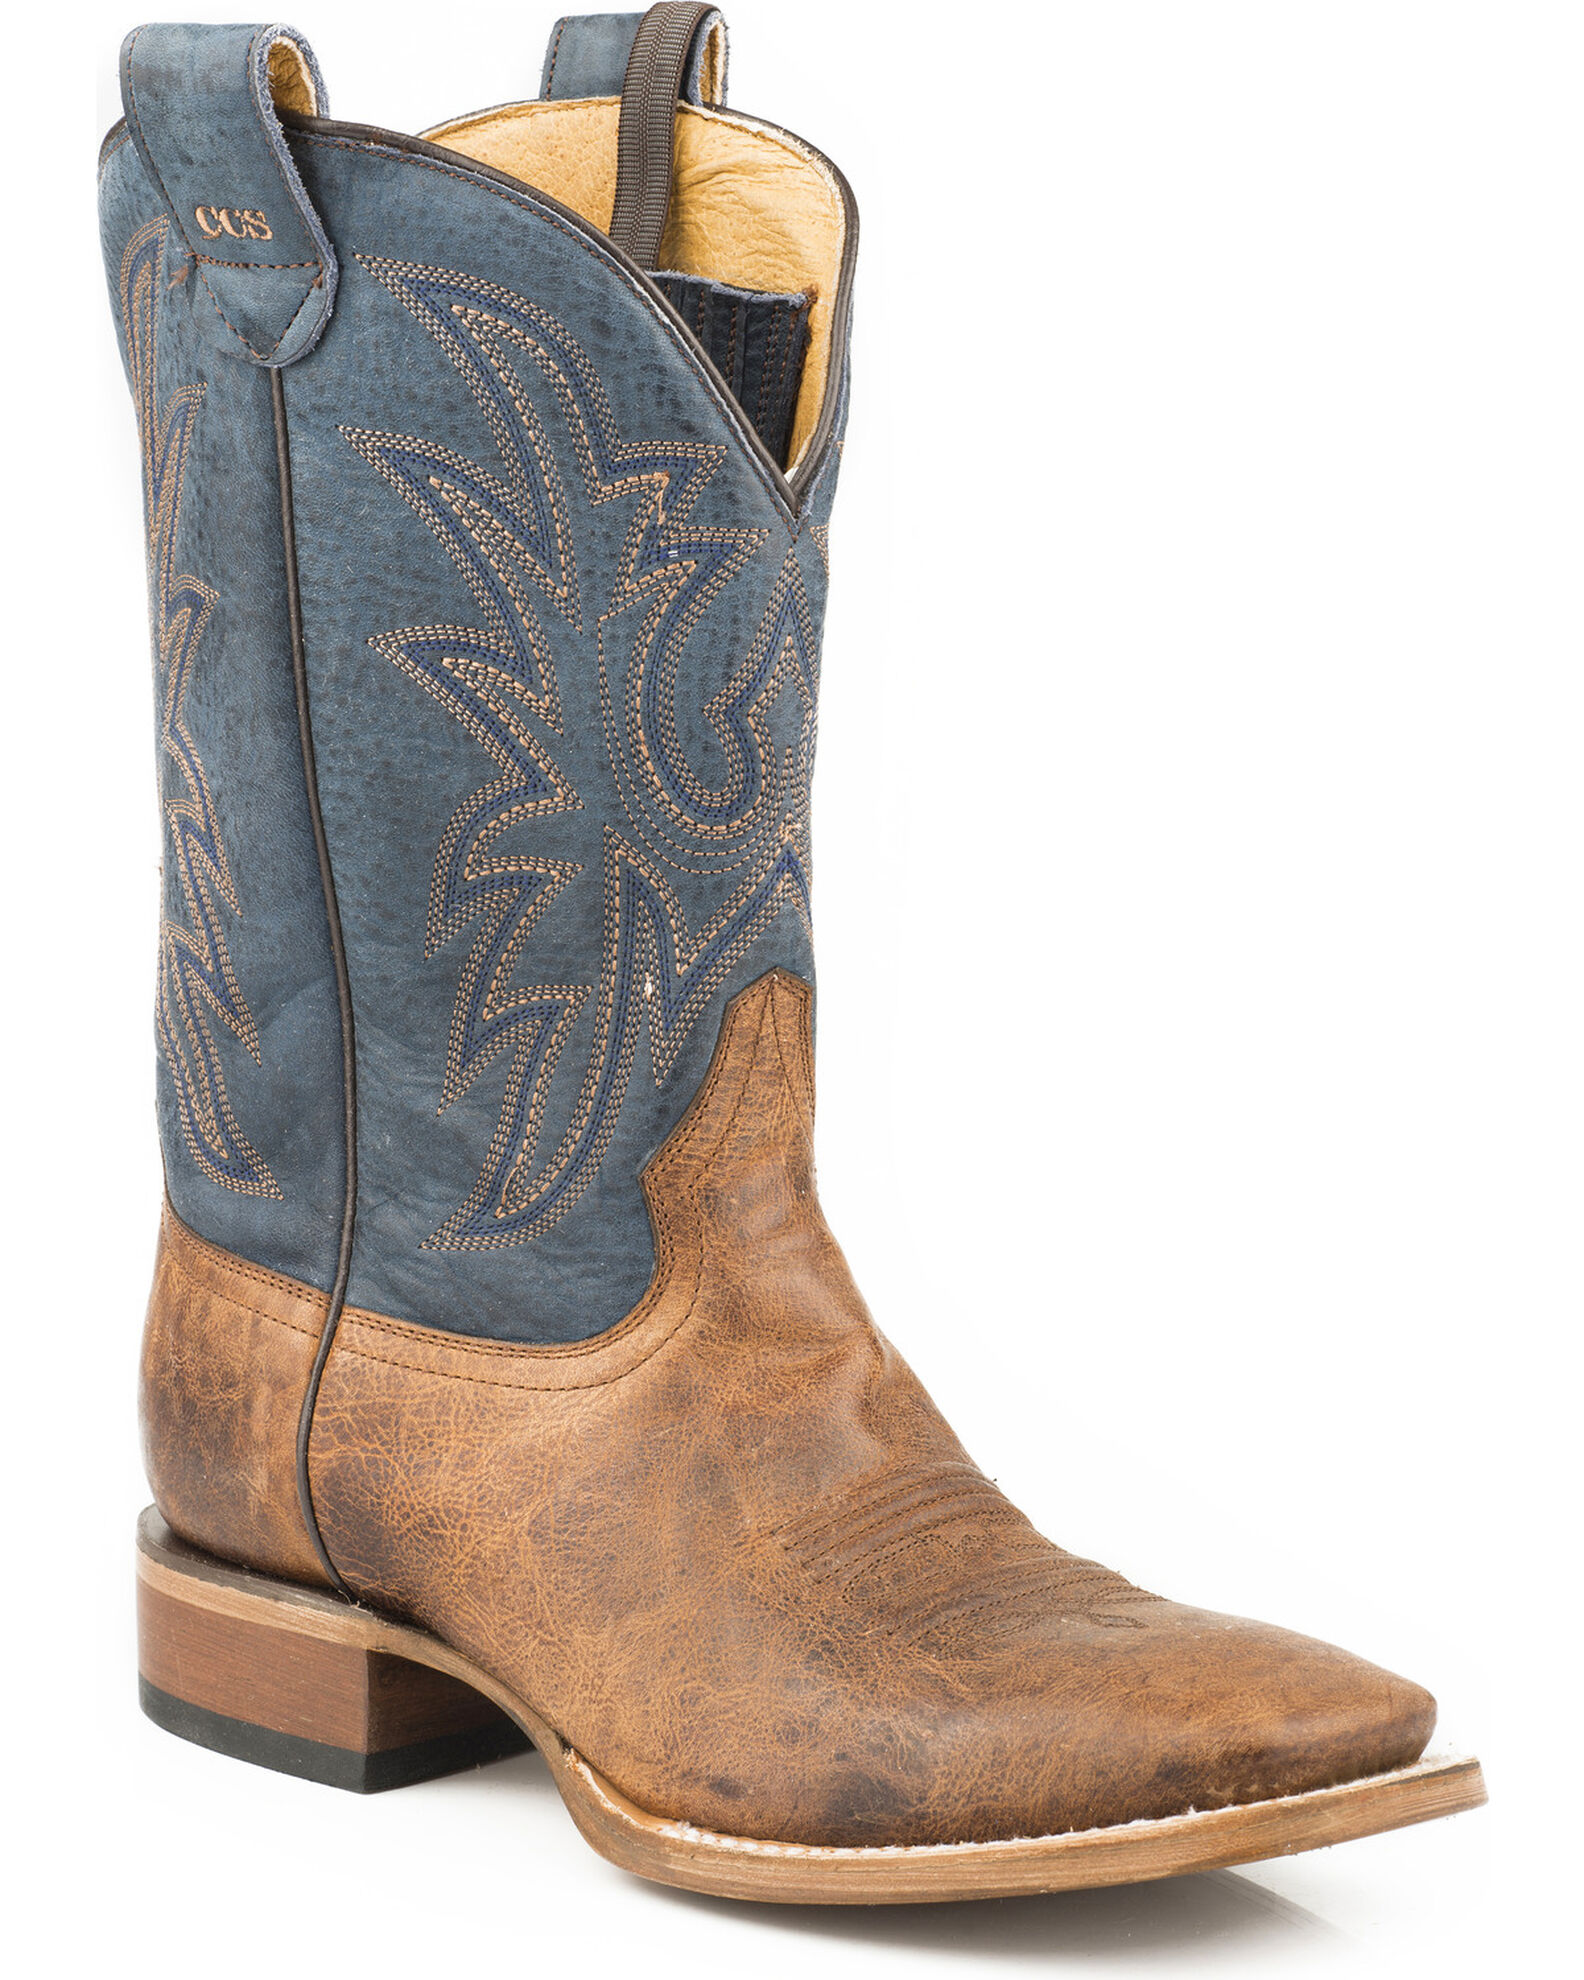 Roper Men's Sidewinder Concealed Carry System Cowboy Boots - Broad